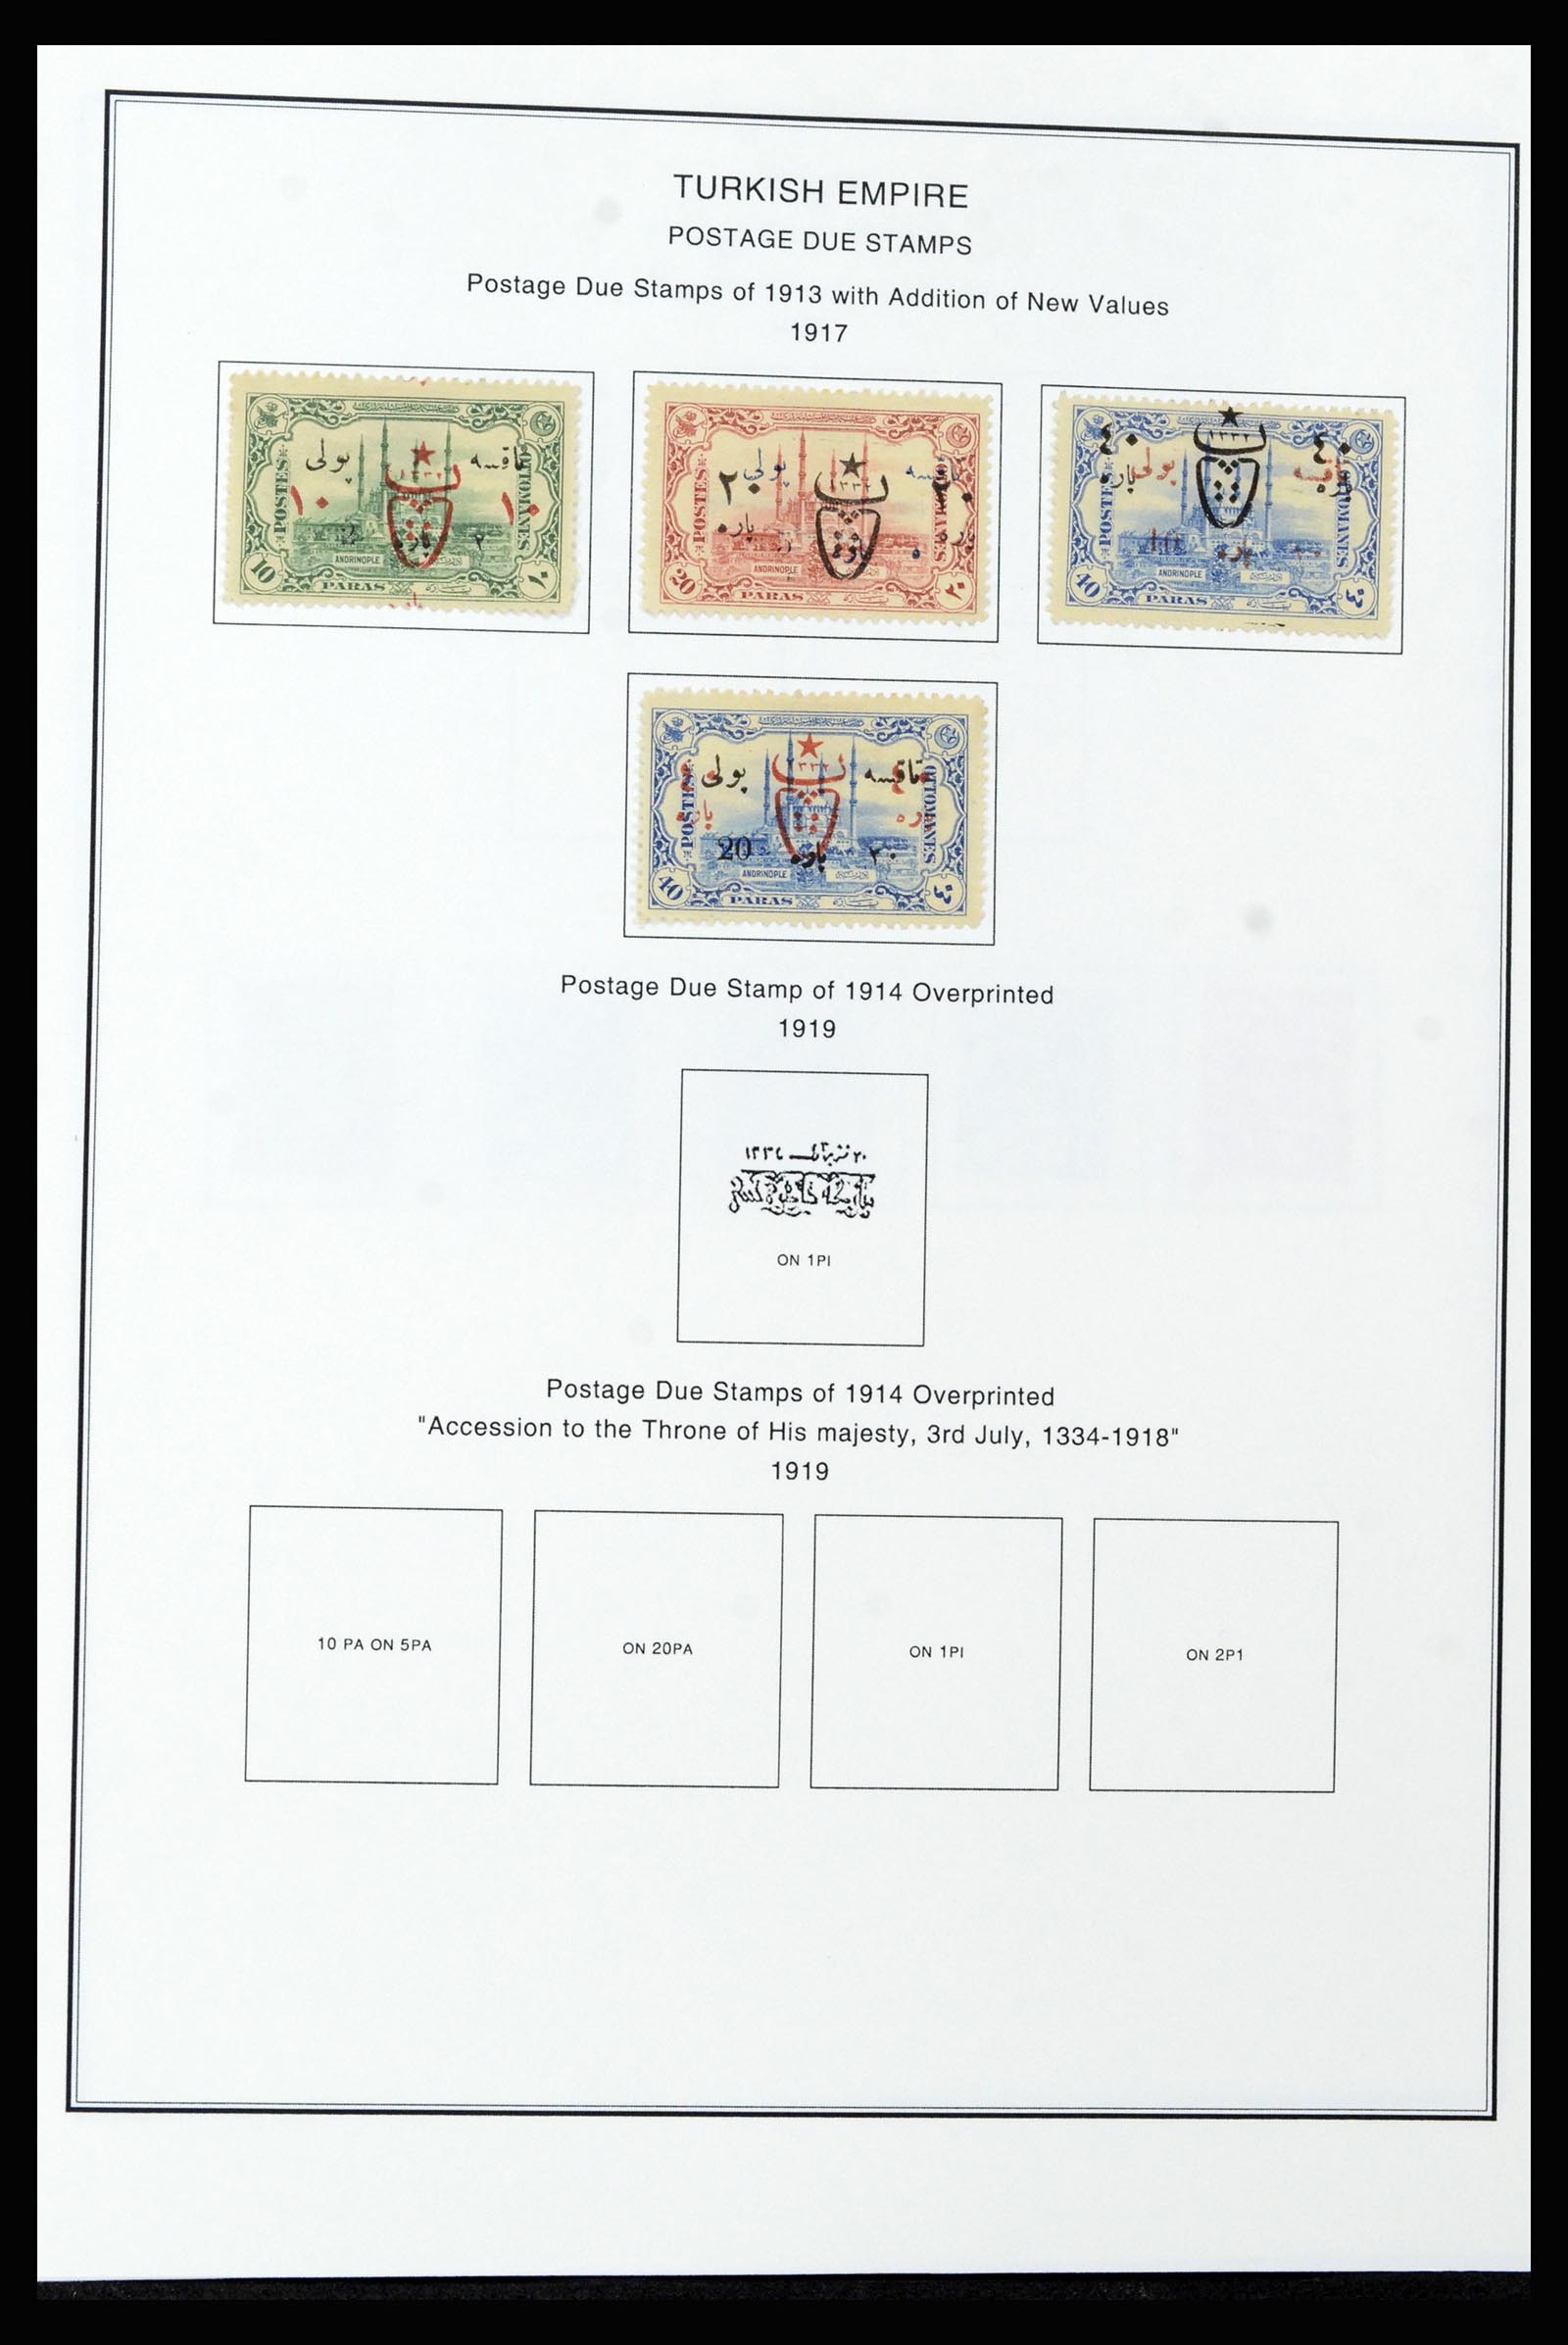 37224 066 - Stamp collection 37224 Turkey 1863-2000.